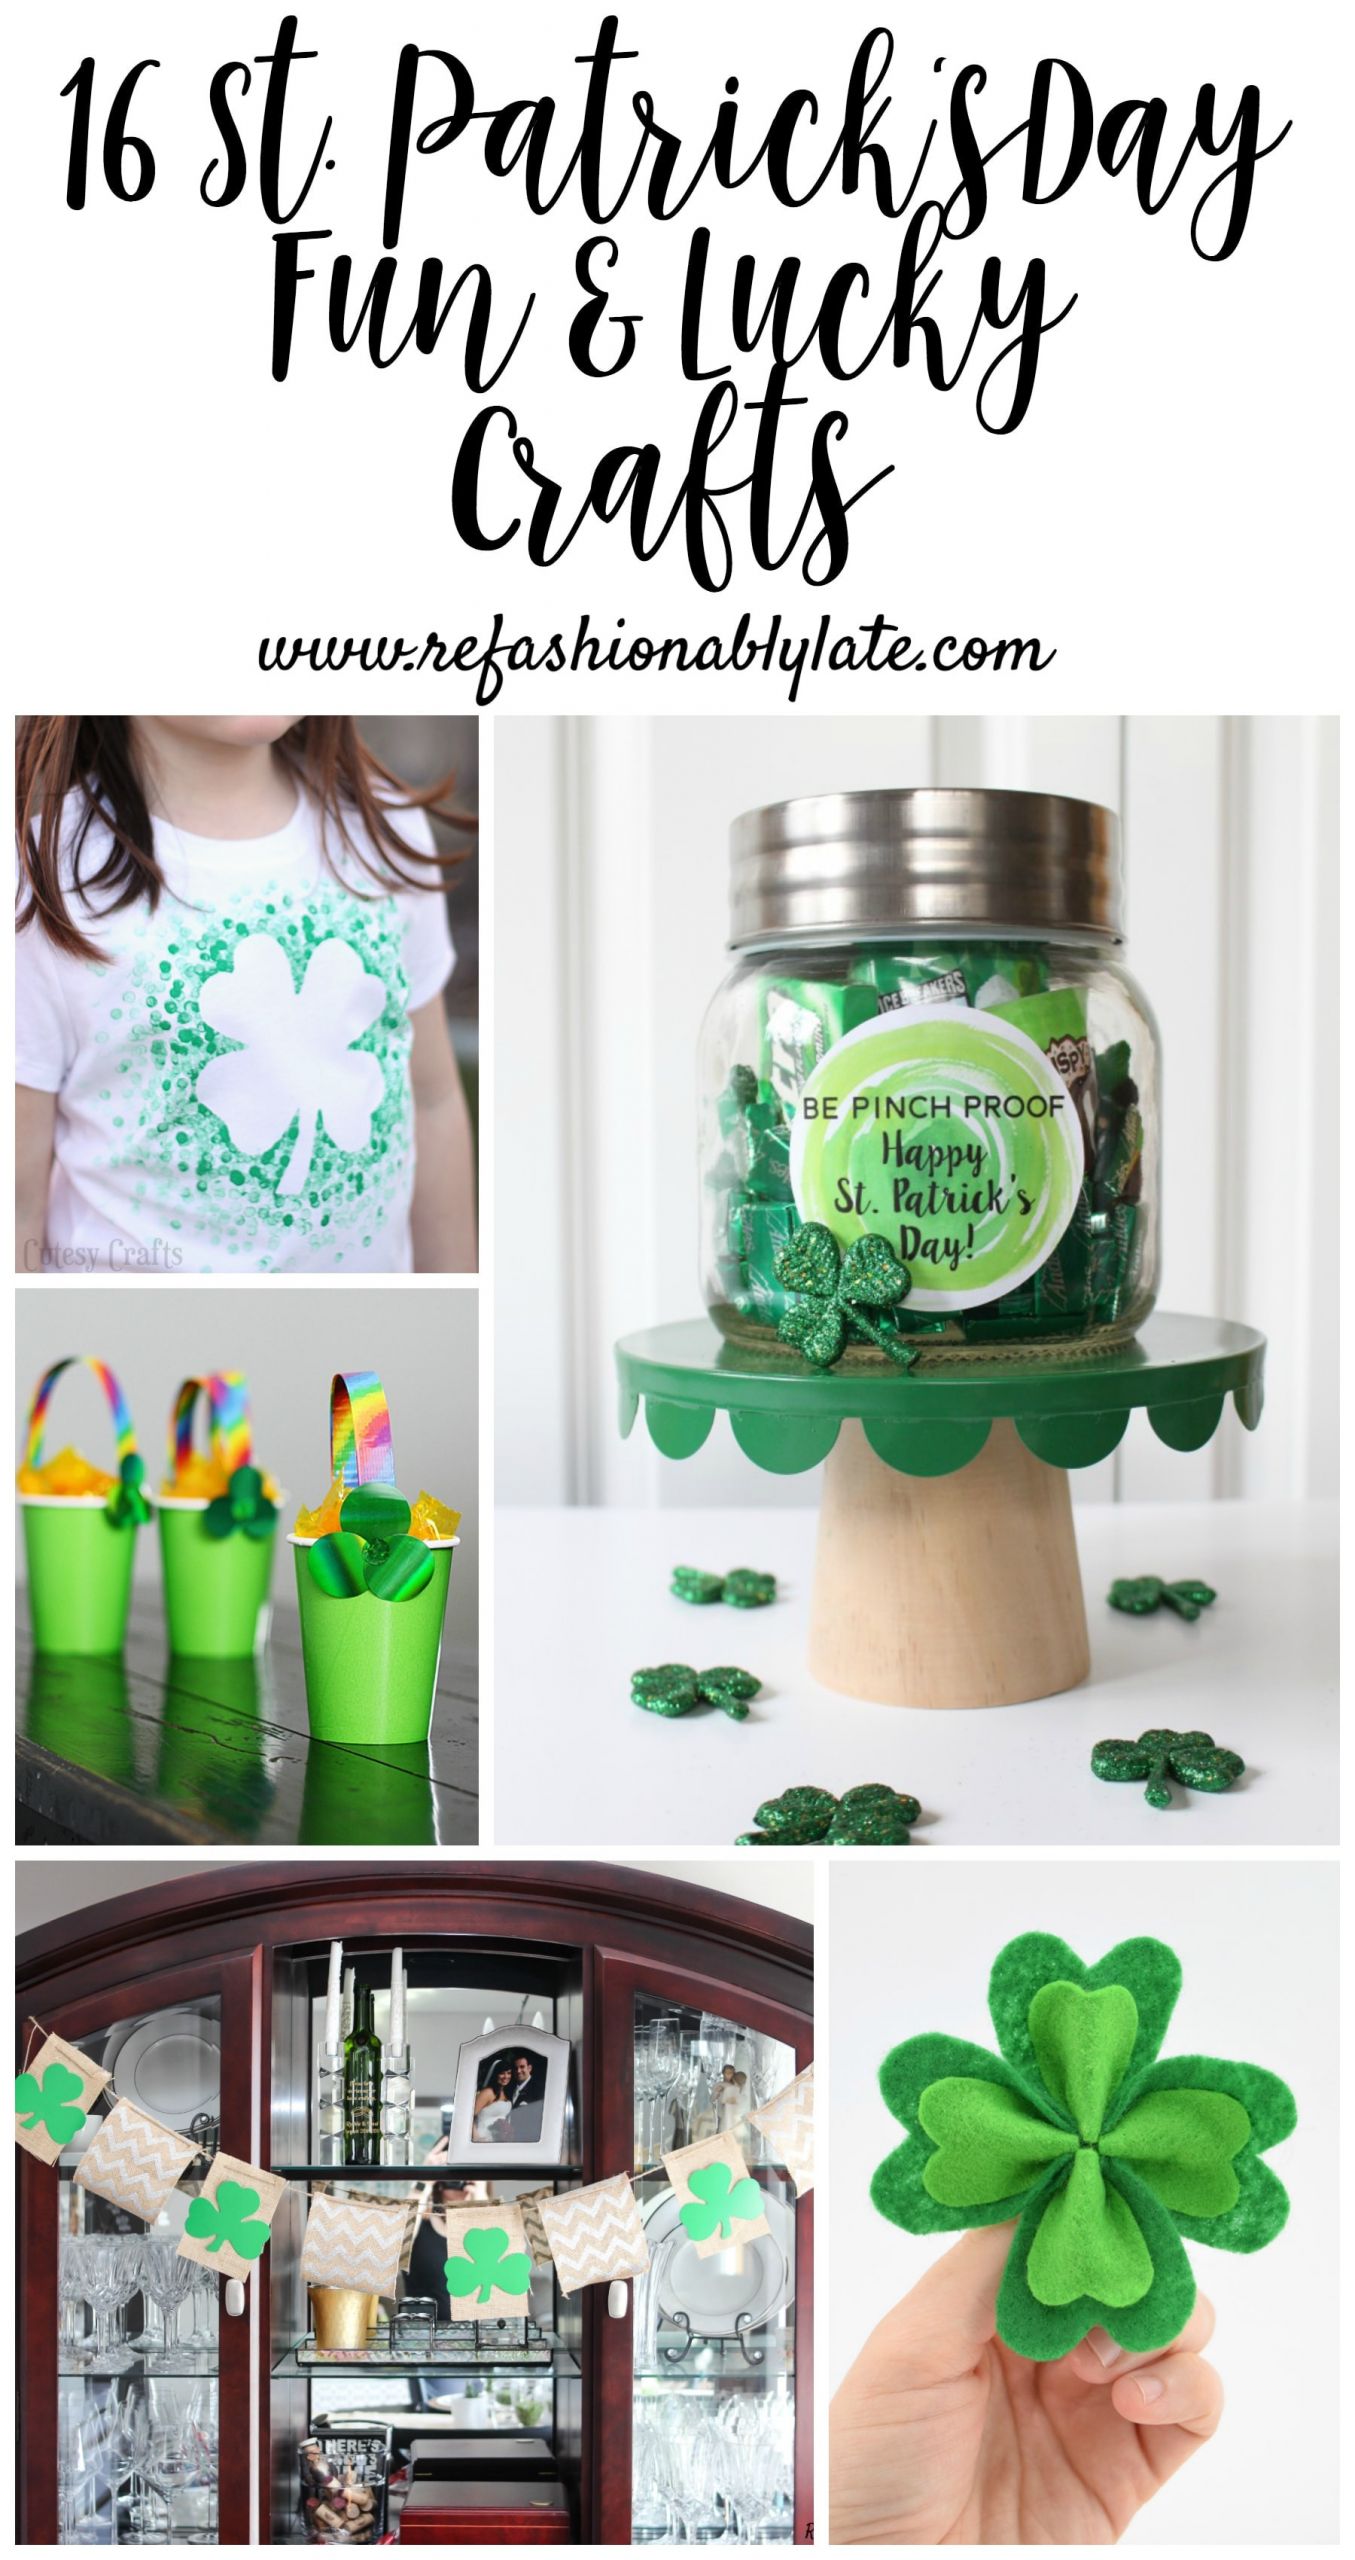 Pinterest St Patrick's Day Crafts
 16 Fun & Lucky St Patrick s Day Crafts • REFASHIONABLY LATE